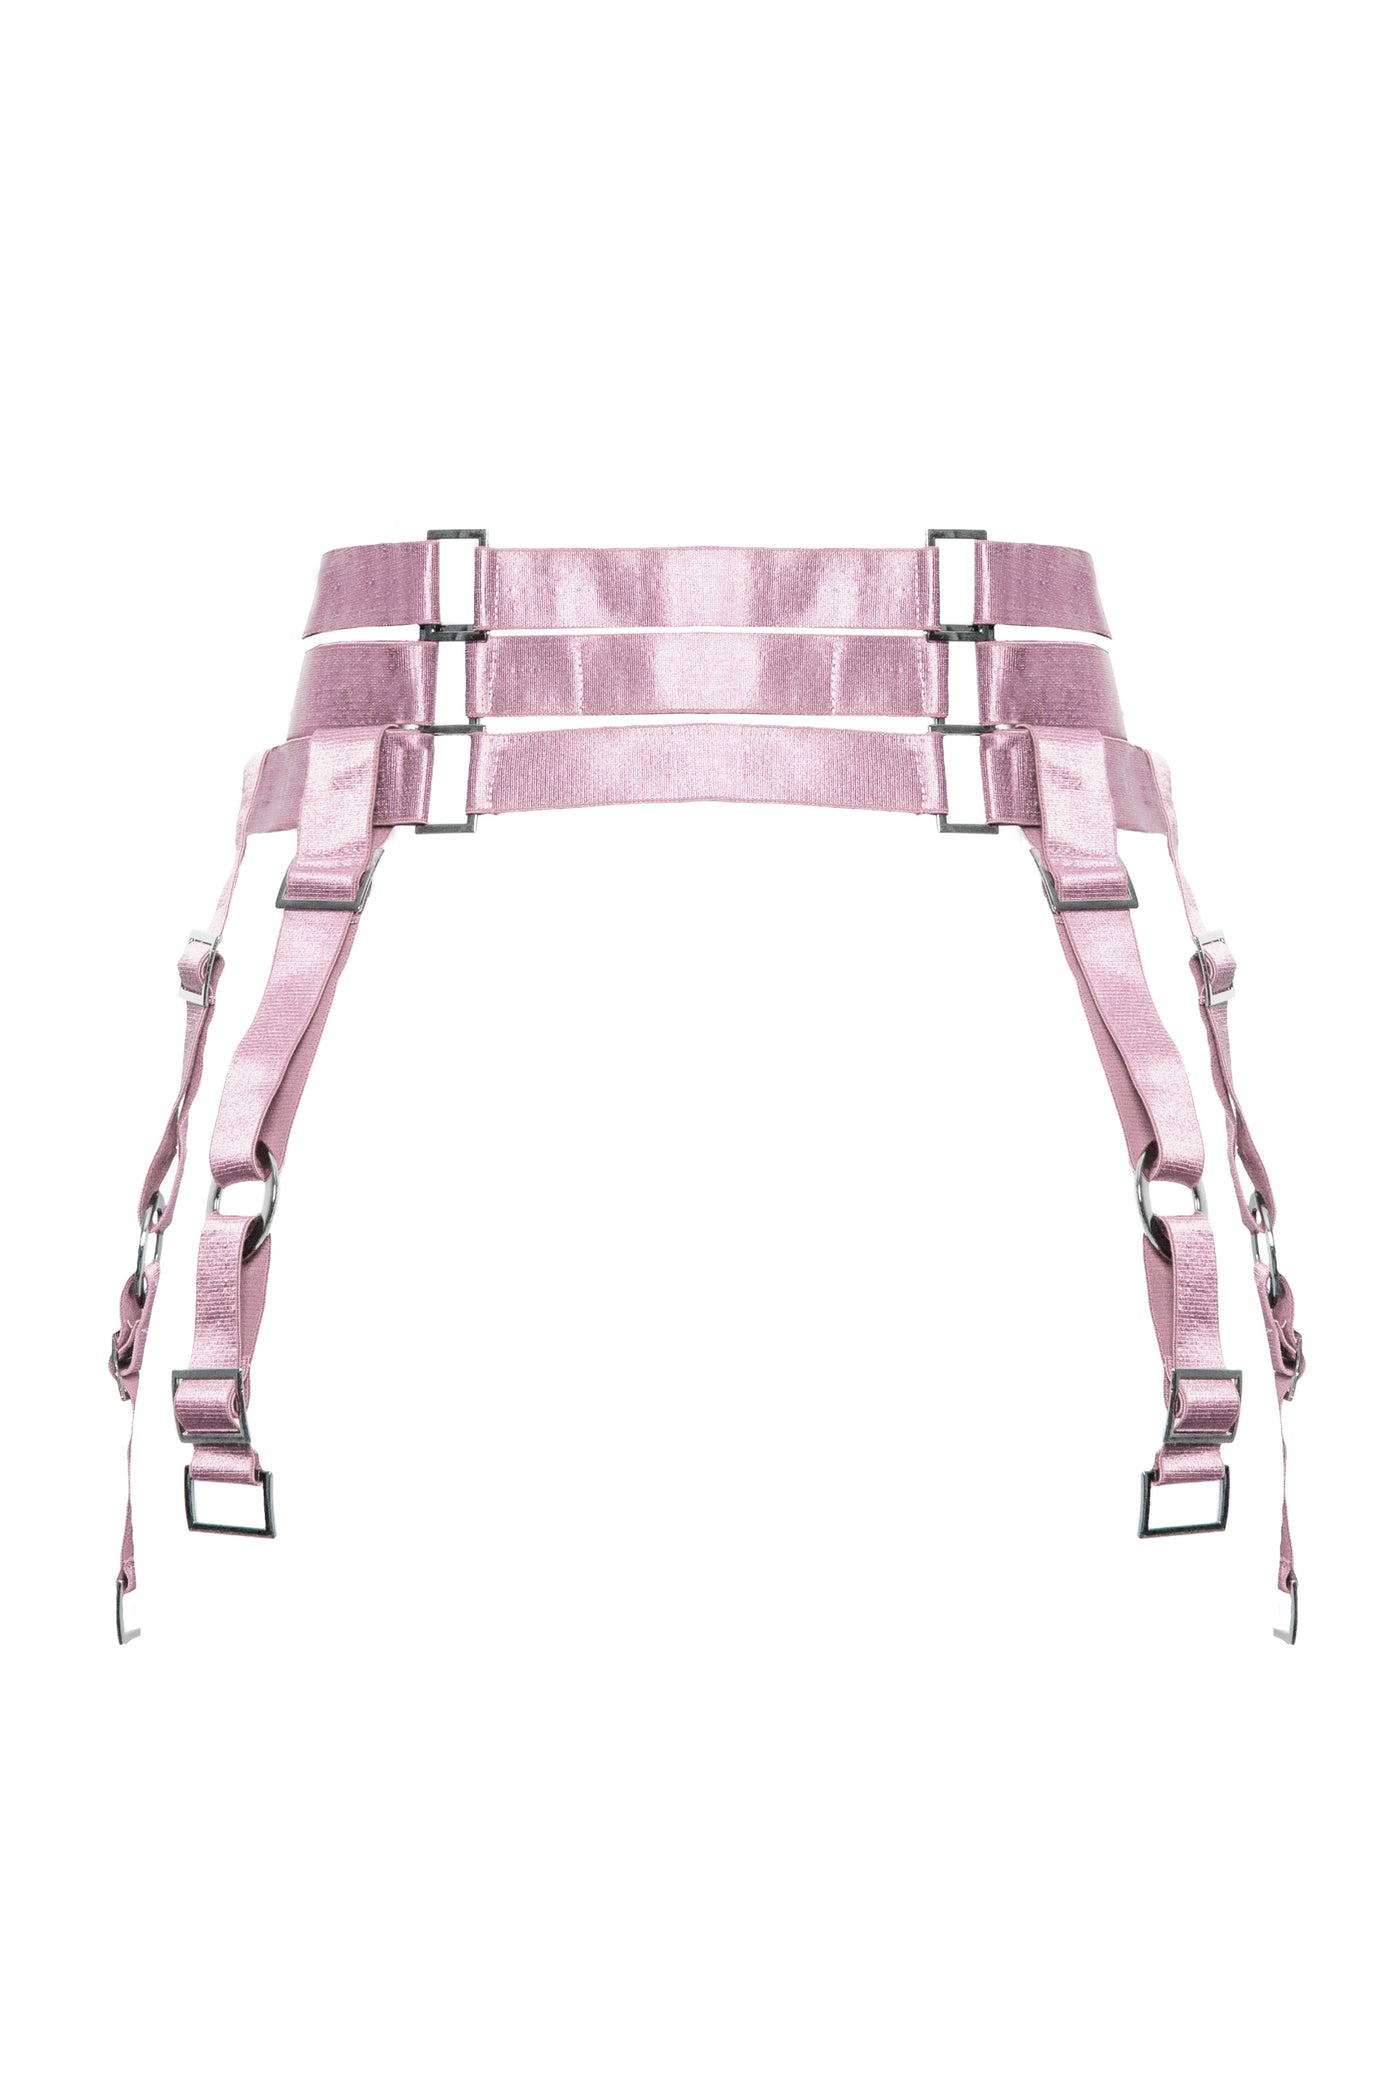 Goetia Garter Belt - Dusted Pink